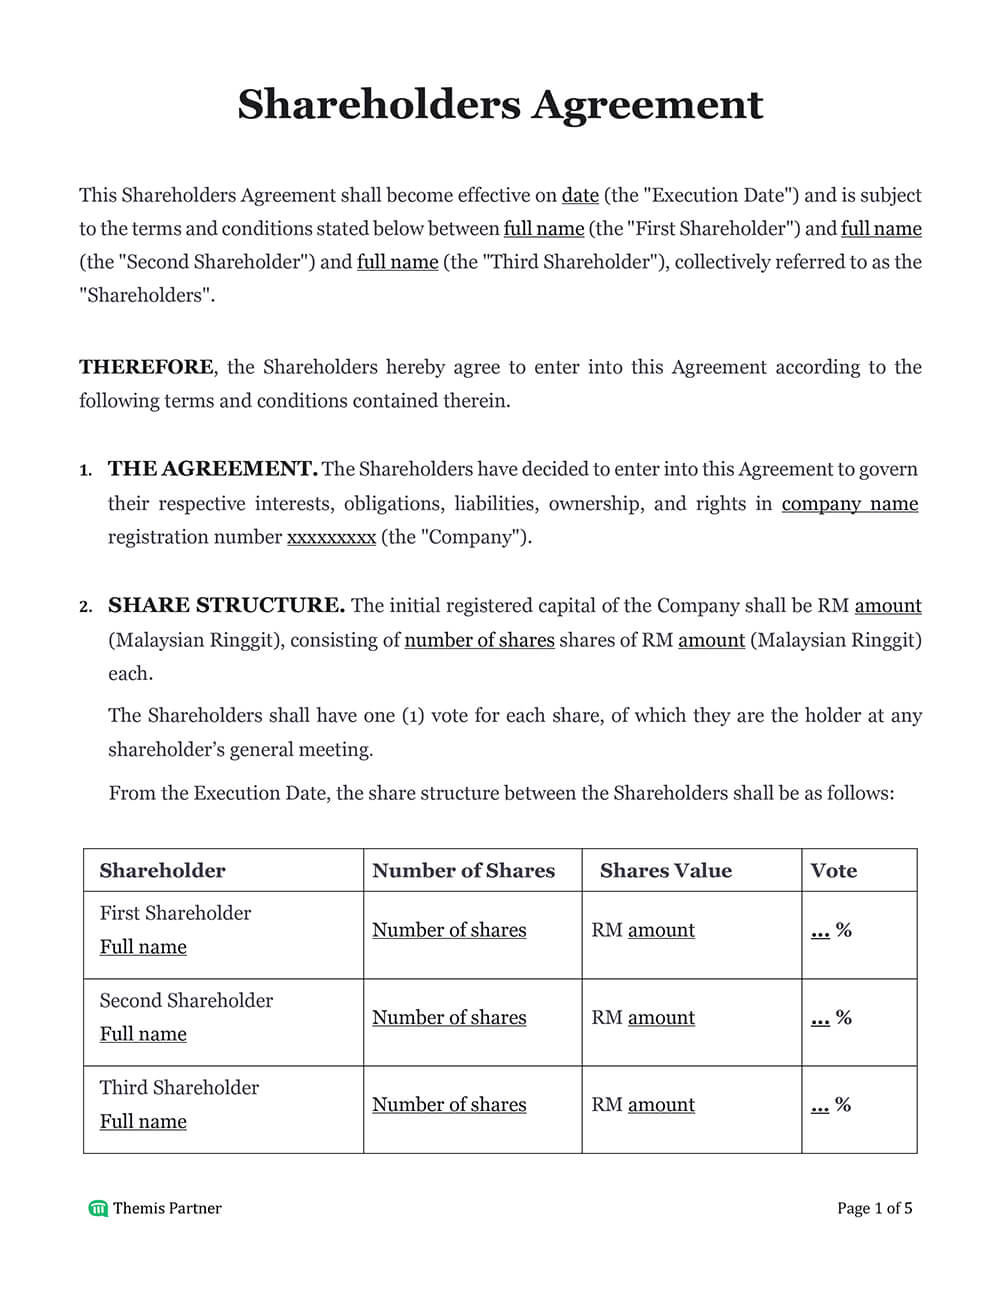 Shareholders agreement template